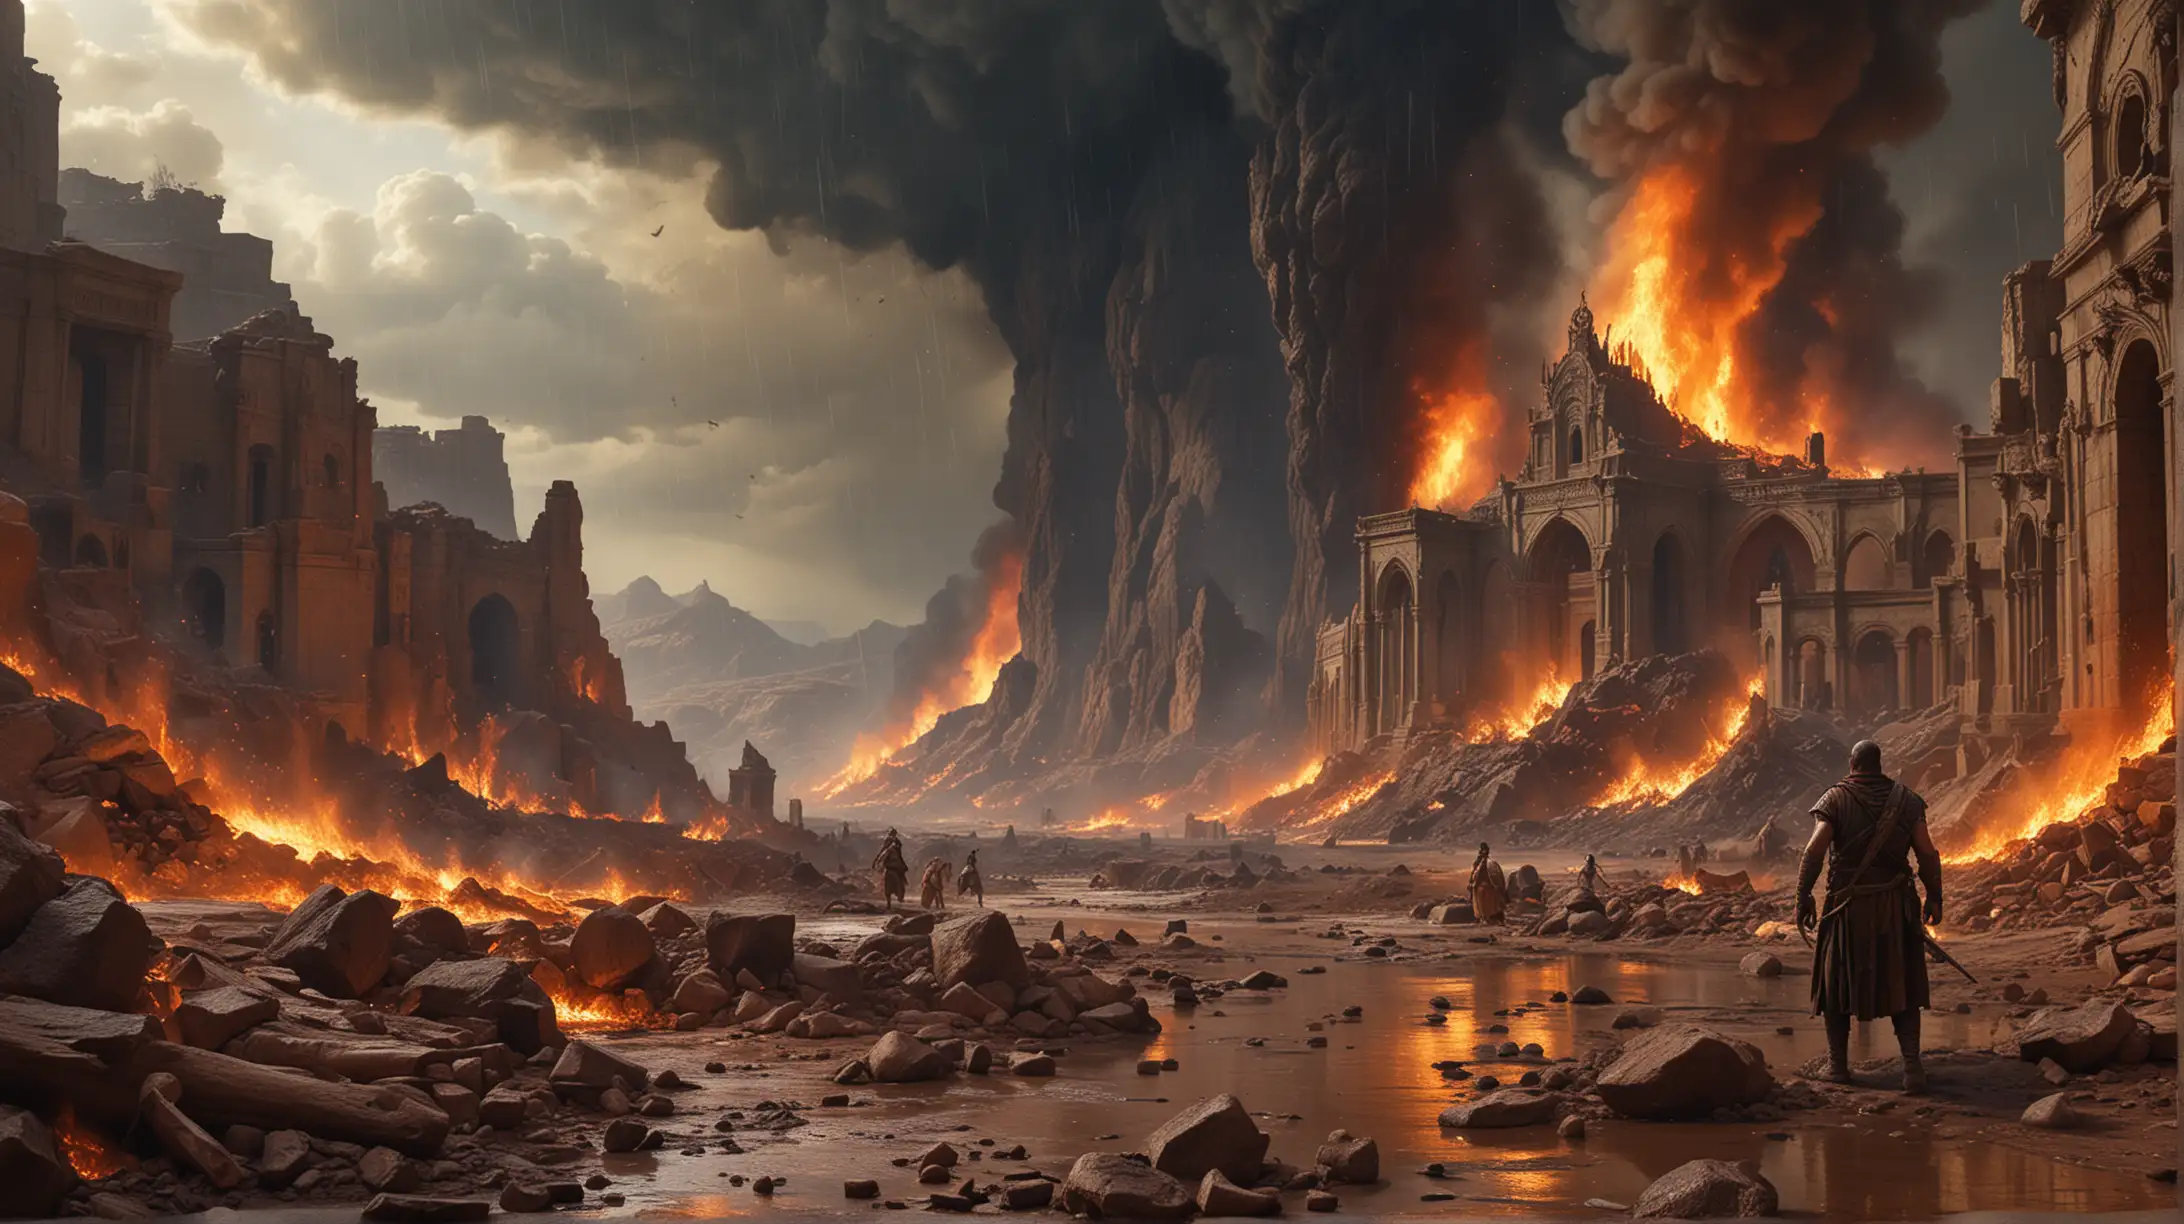 Biblical Cataclysm Sodom and Gomorrahs Sulfuric Downfall